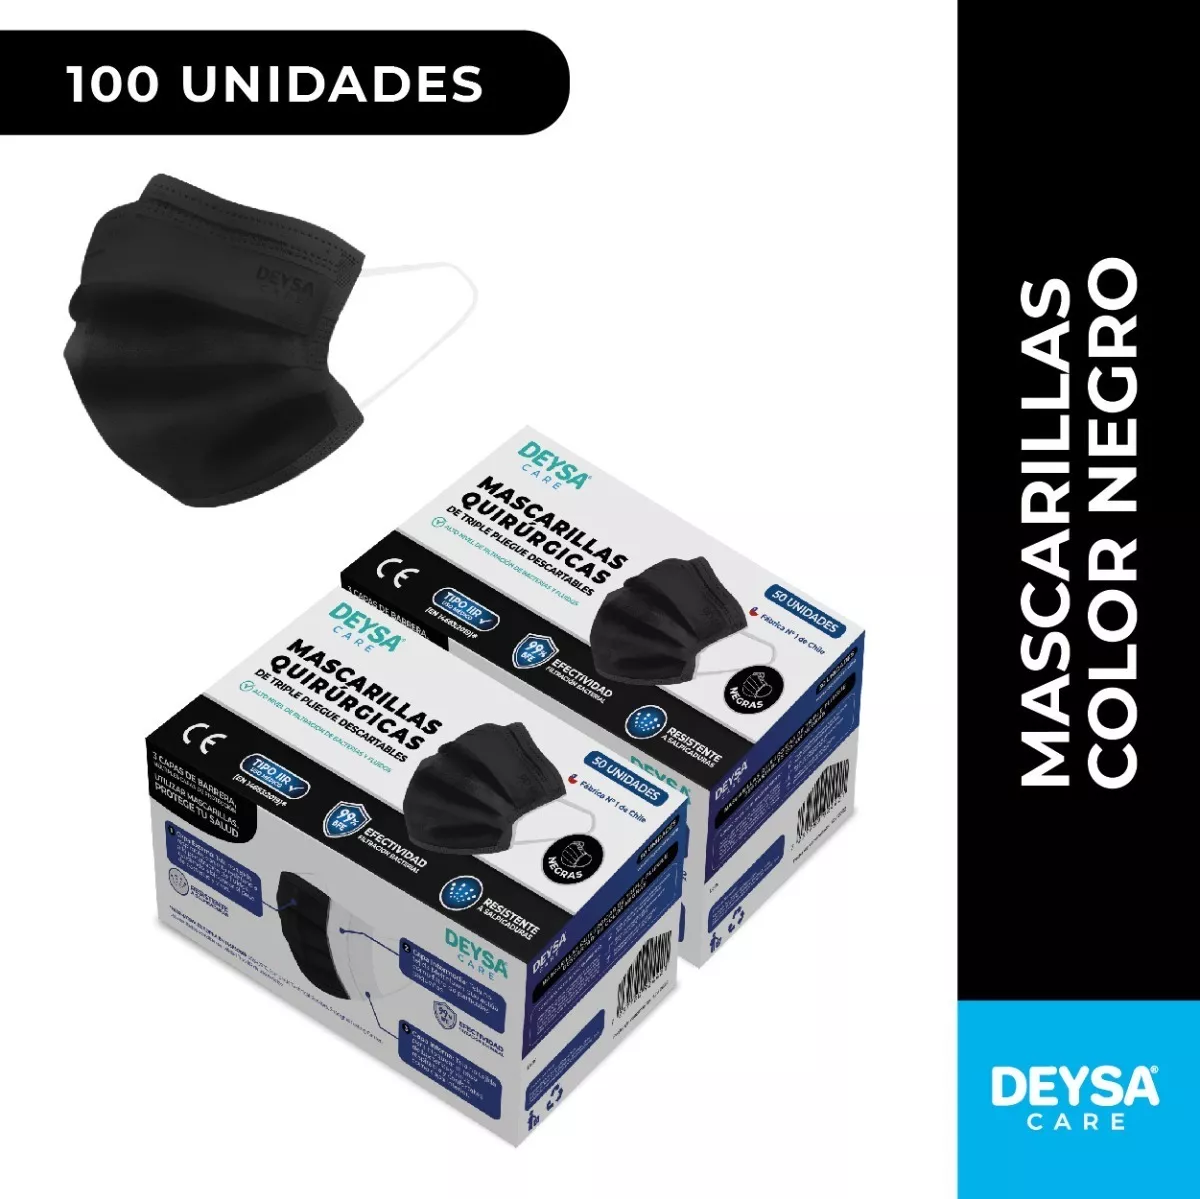 Mascarillas Desechables 50 Un 2 Cajas (100 Un). Color Negro